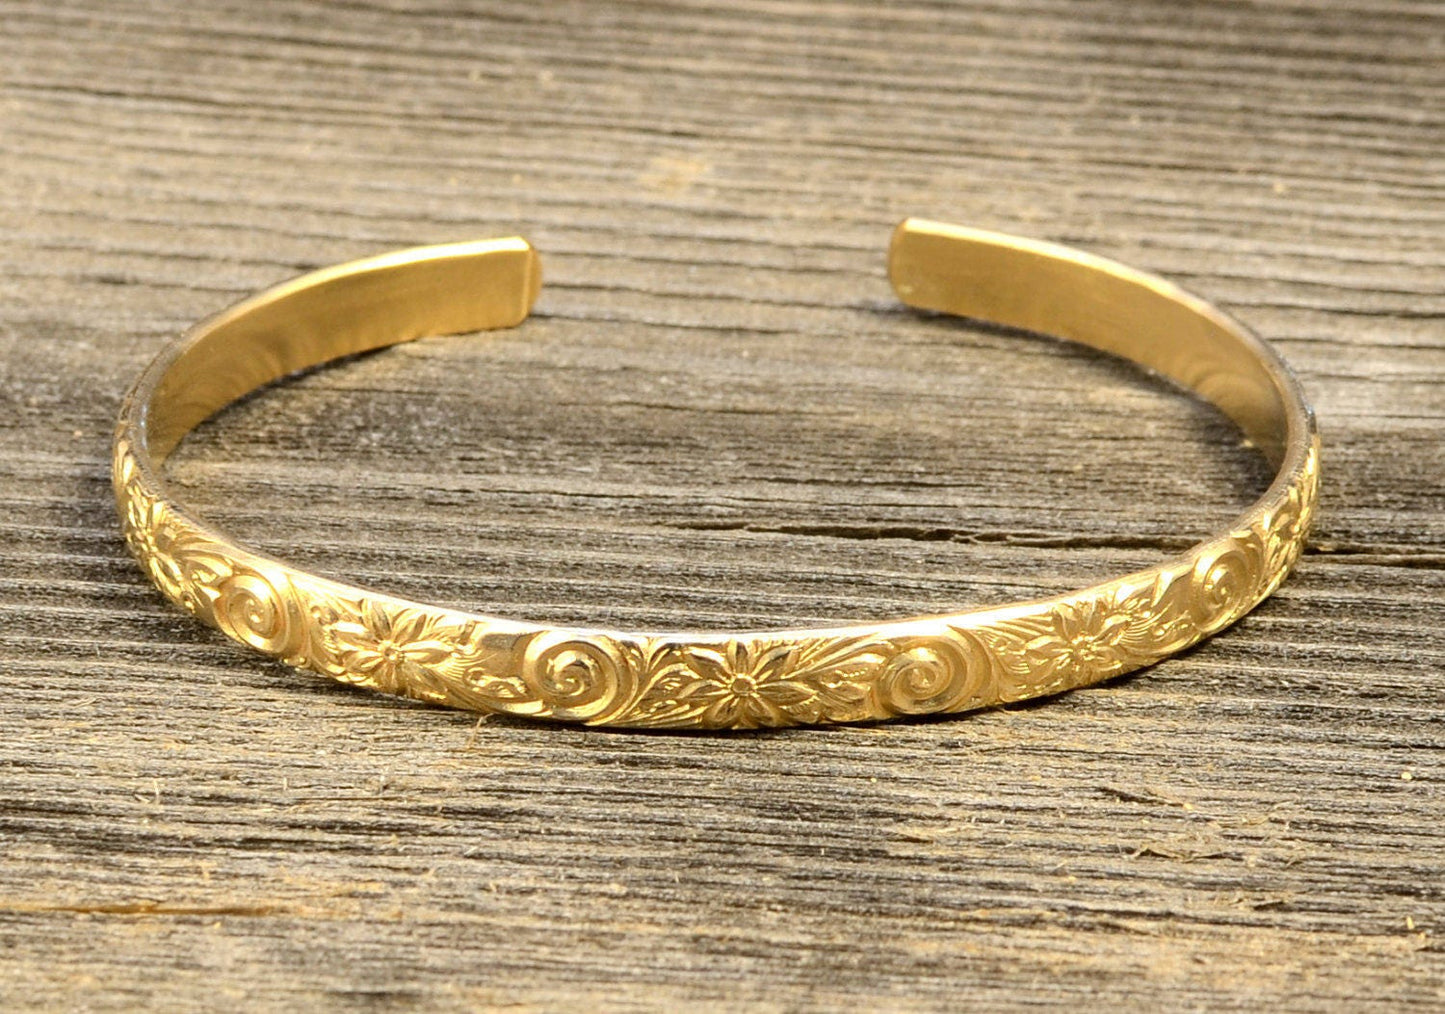 14k/20 Flowers and Swirls on Gold Filled Bracelet